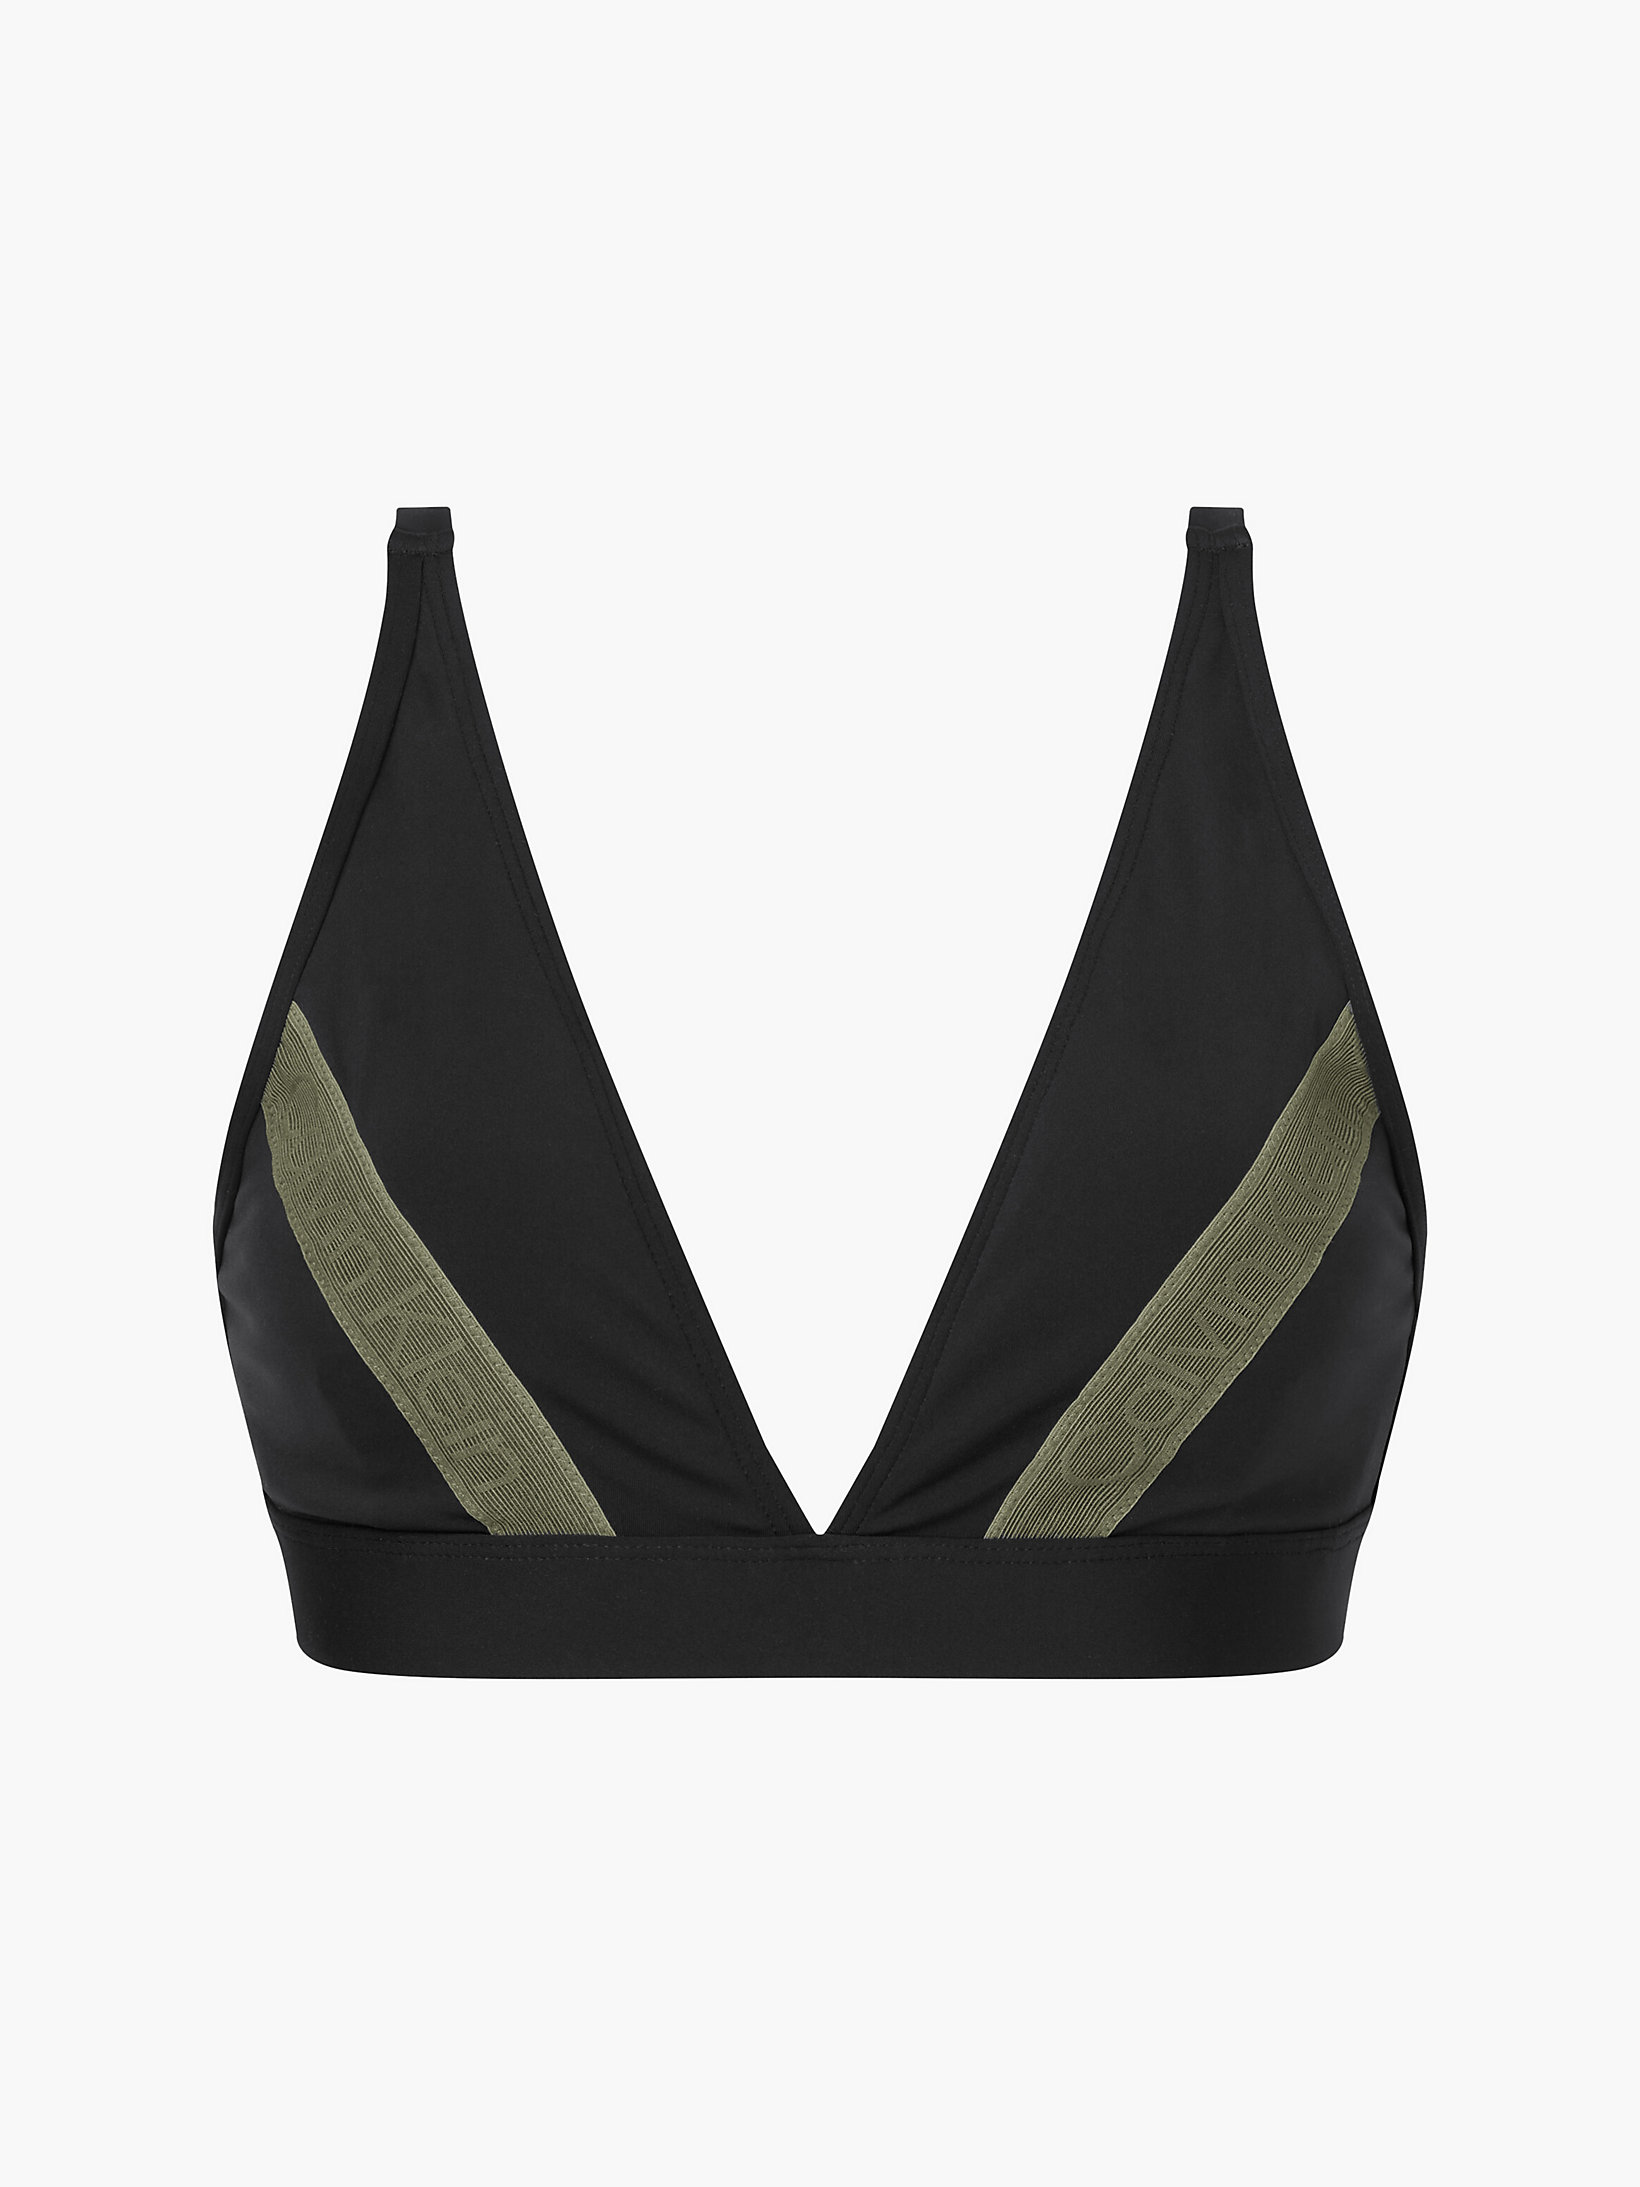 Pvh Black Triangle Bikini Top - Curve undefined women Calvin Klein